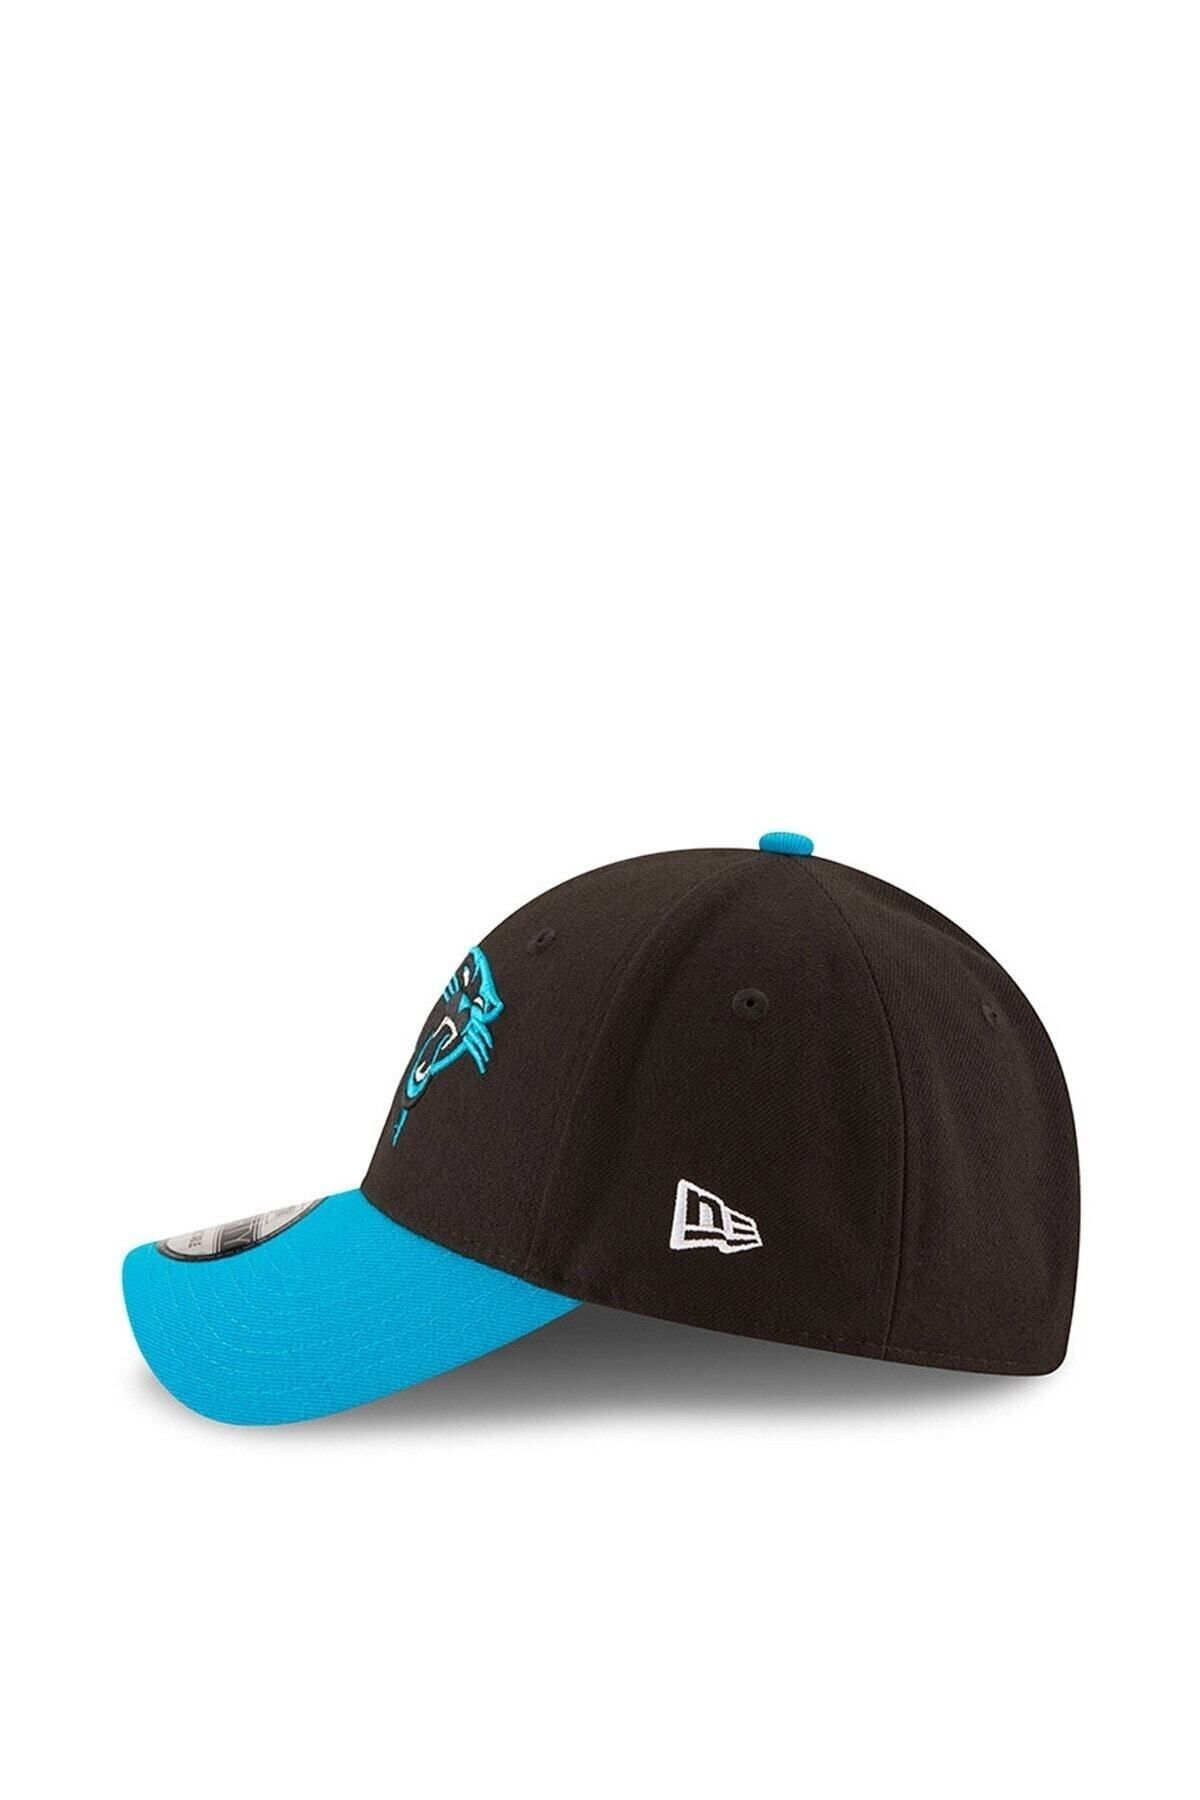 NEW ERA The League Carpan Team یونیسکس Blue Hat 10517891-07